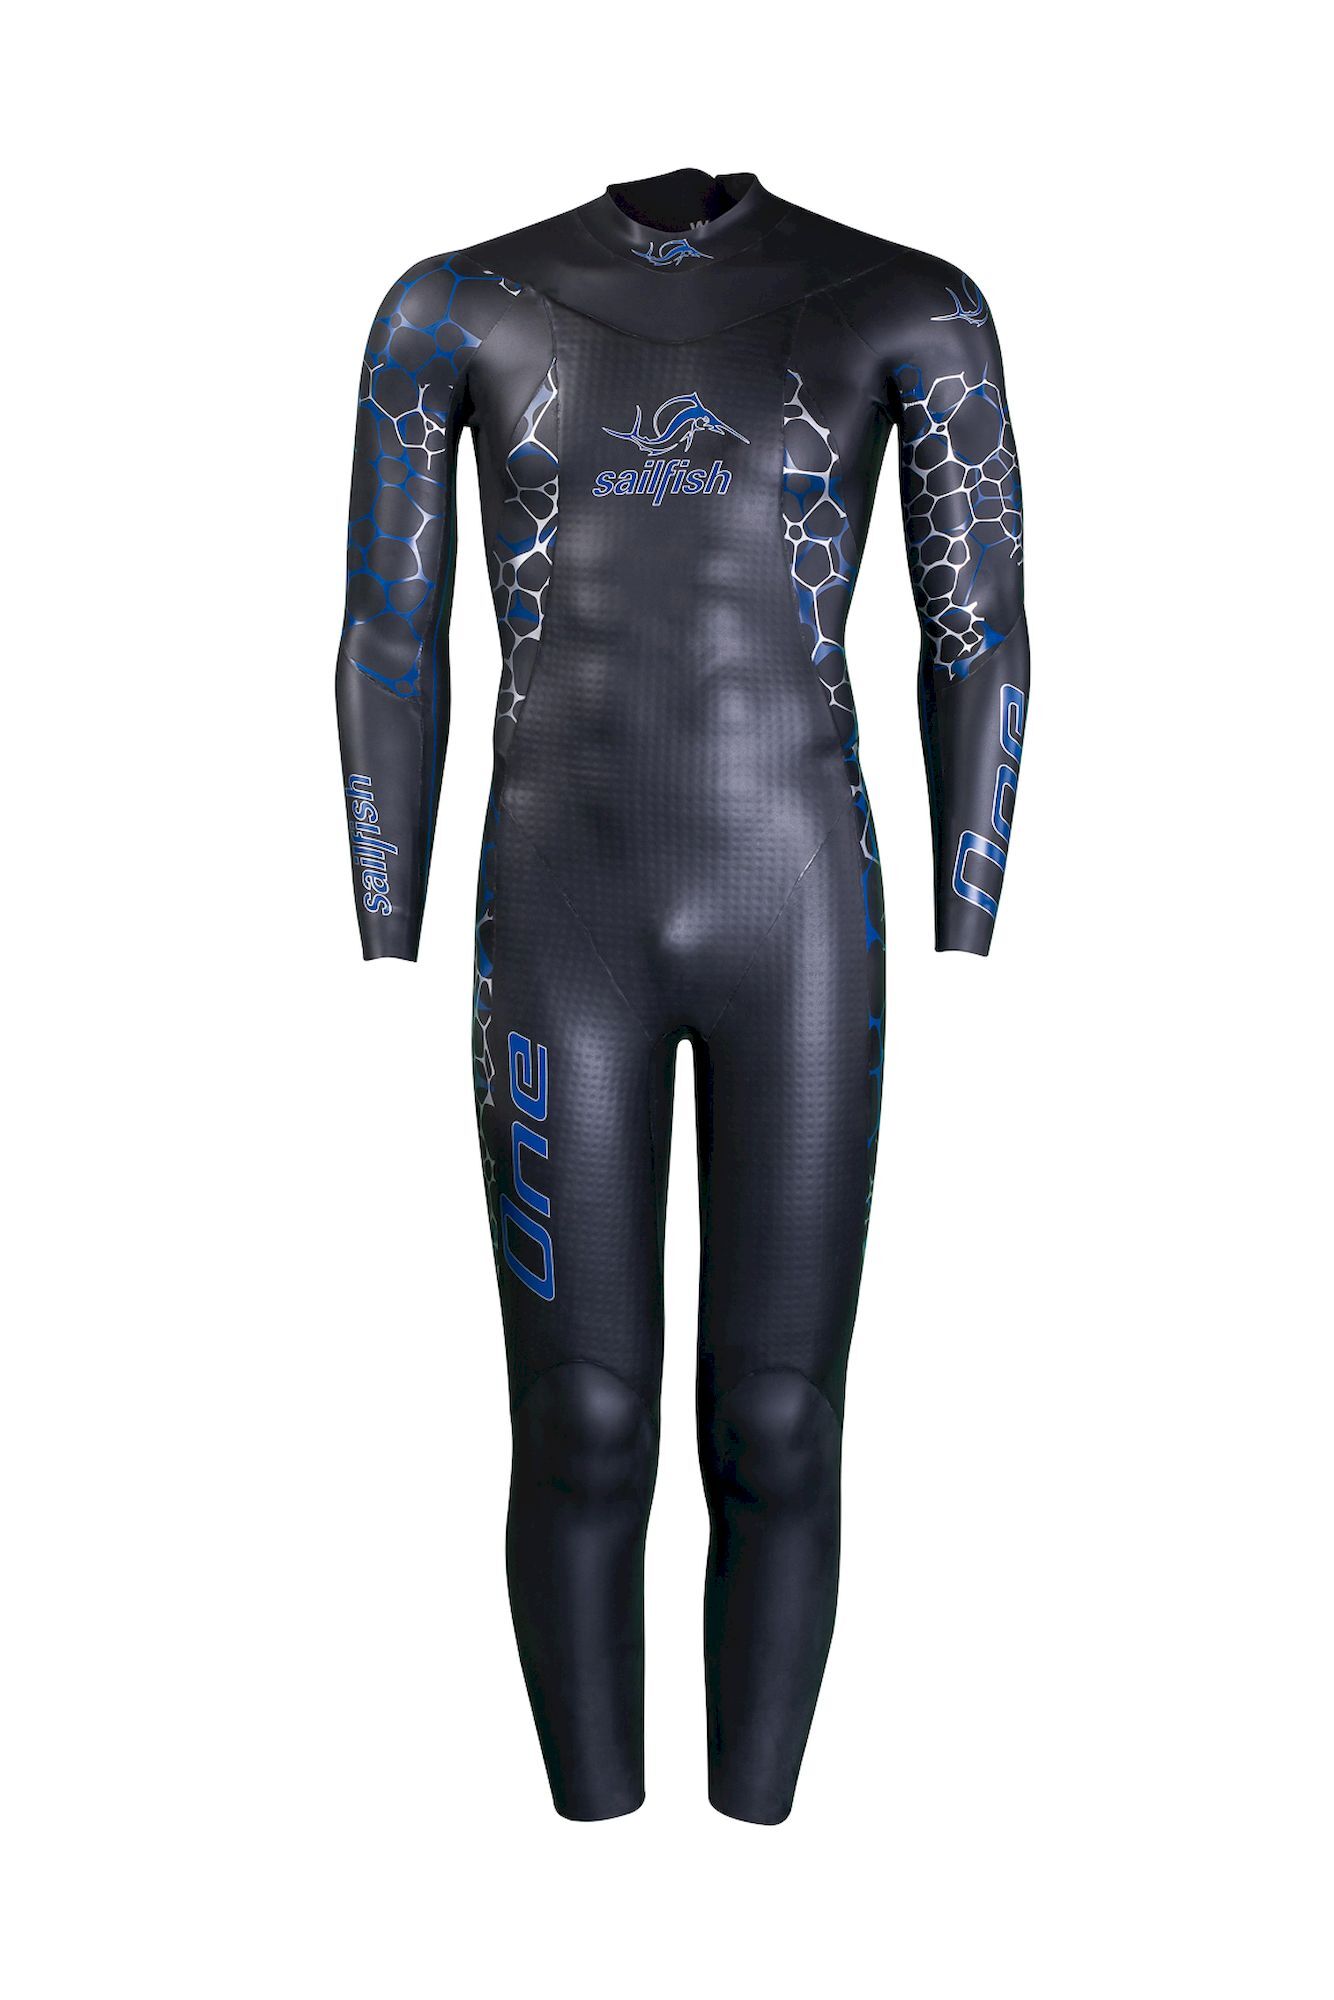 Sailfish Wetsuit Mens One 7 - Neoprene wetsuit - Men's